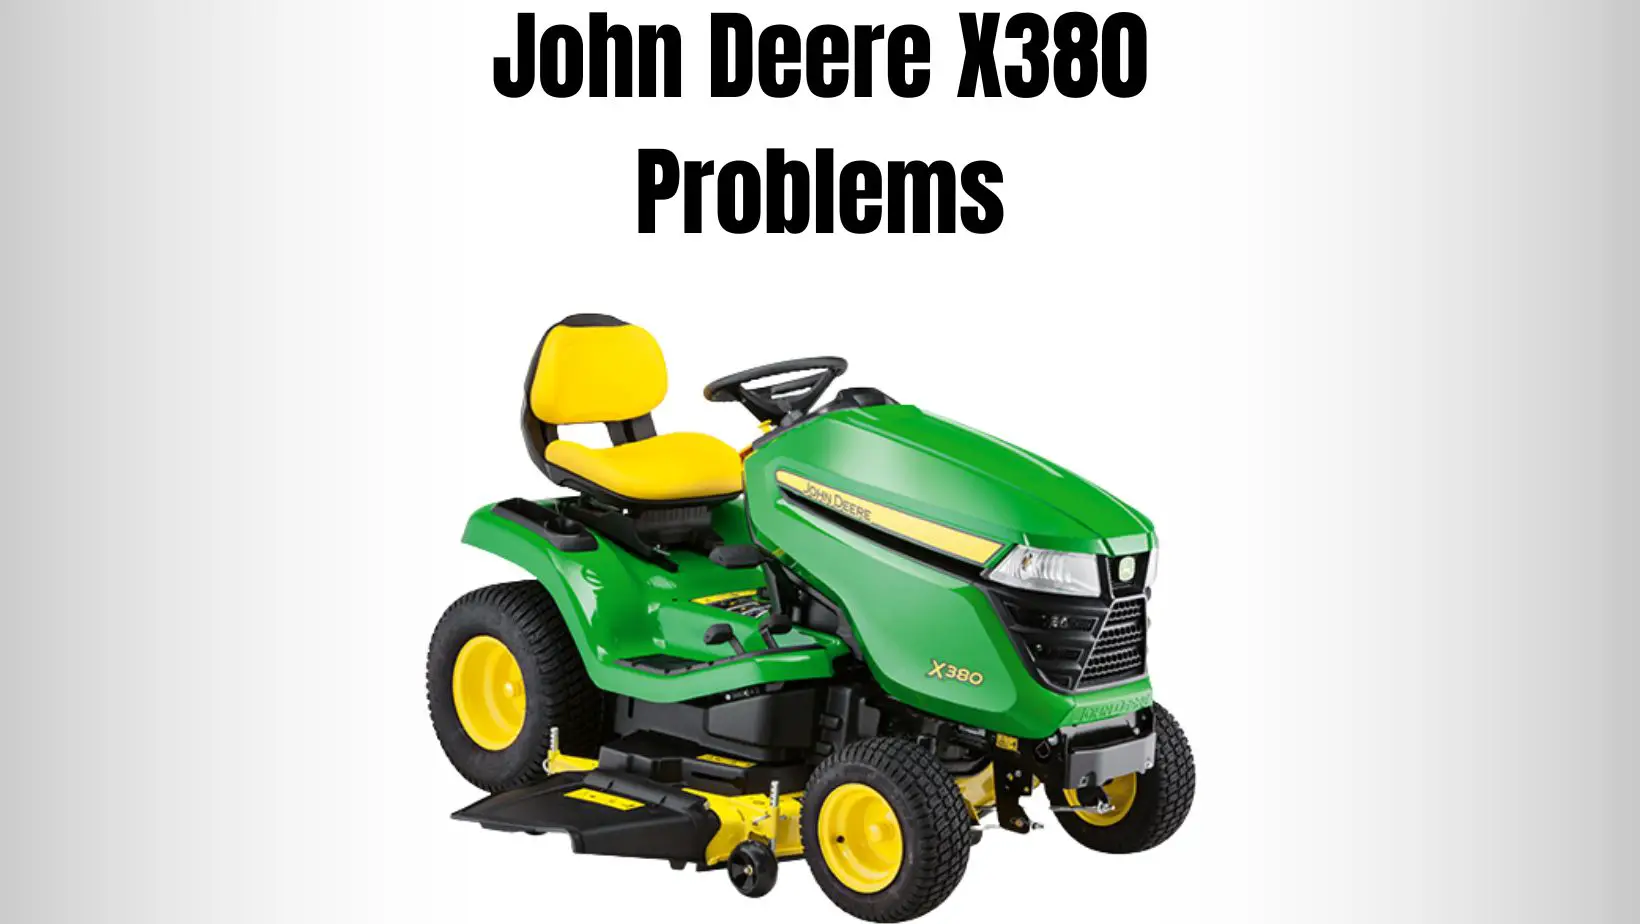 John Deere X380 Problems